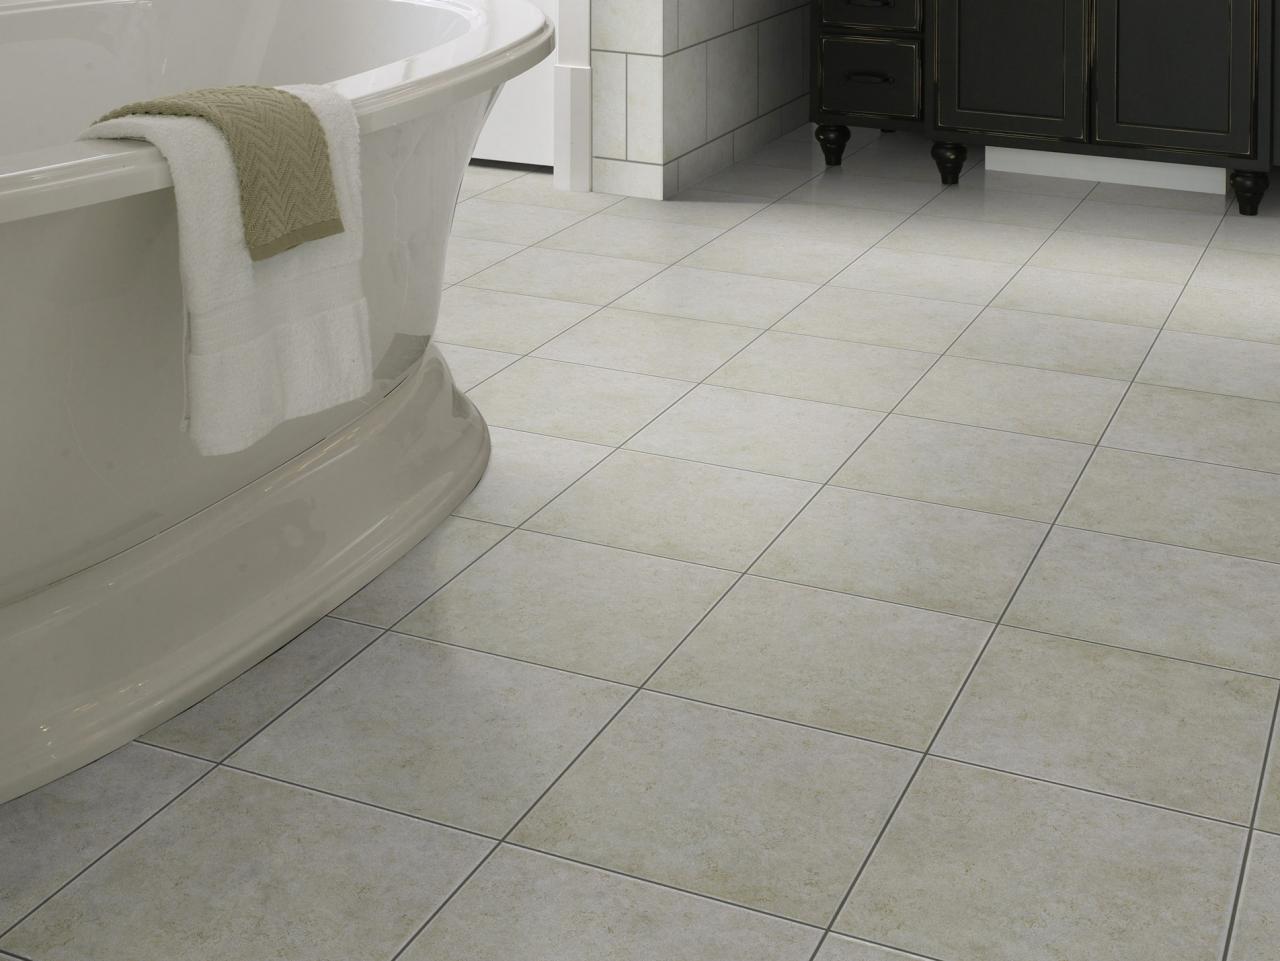 Why Homeowners Love Ceramic Tile, Pics Of Bathroom Floor Tiles